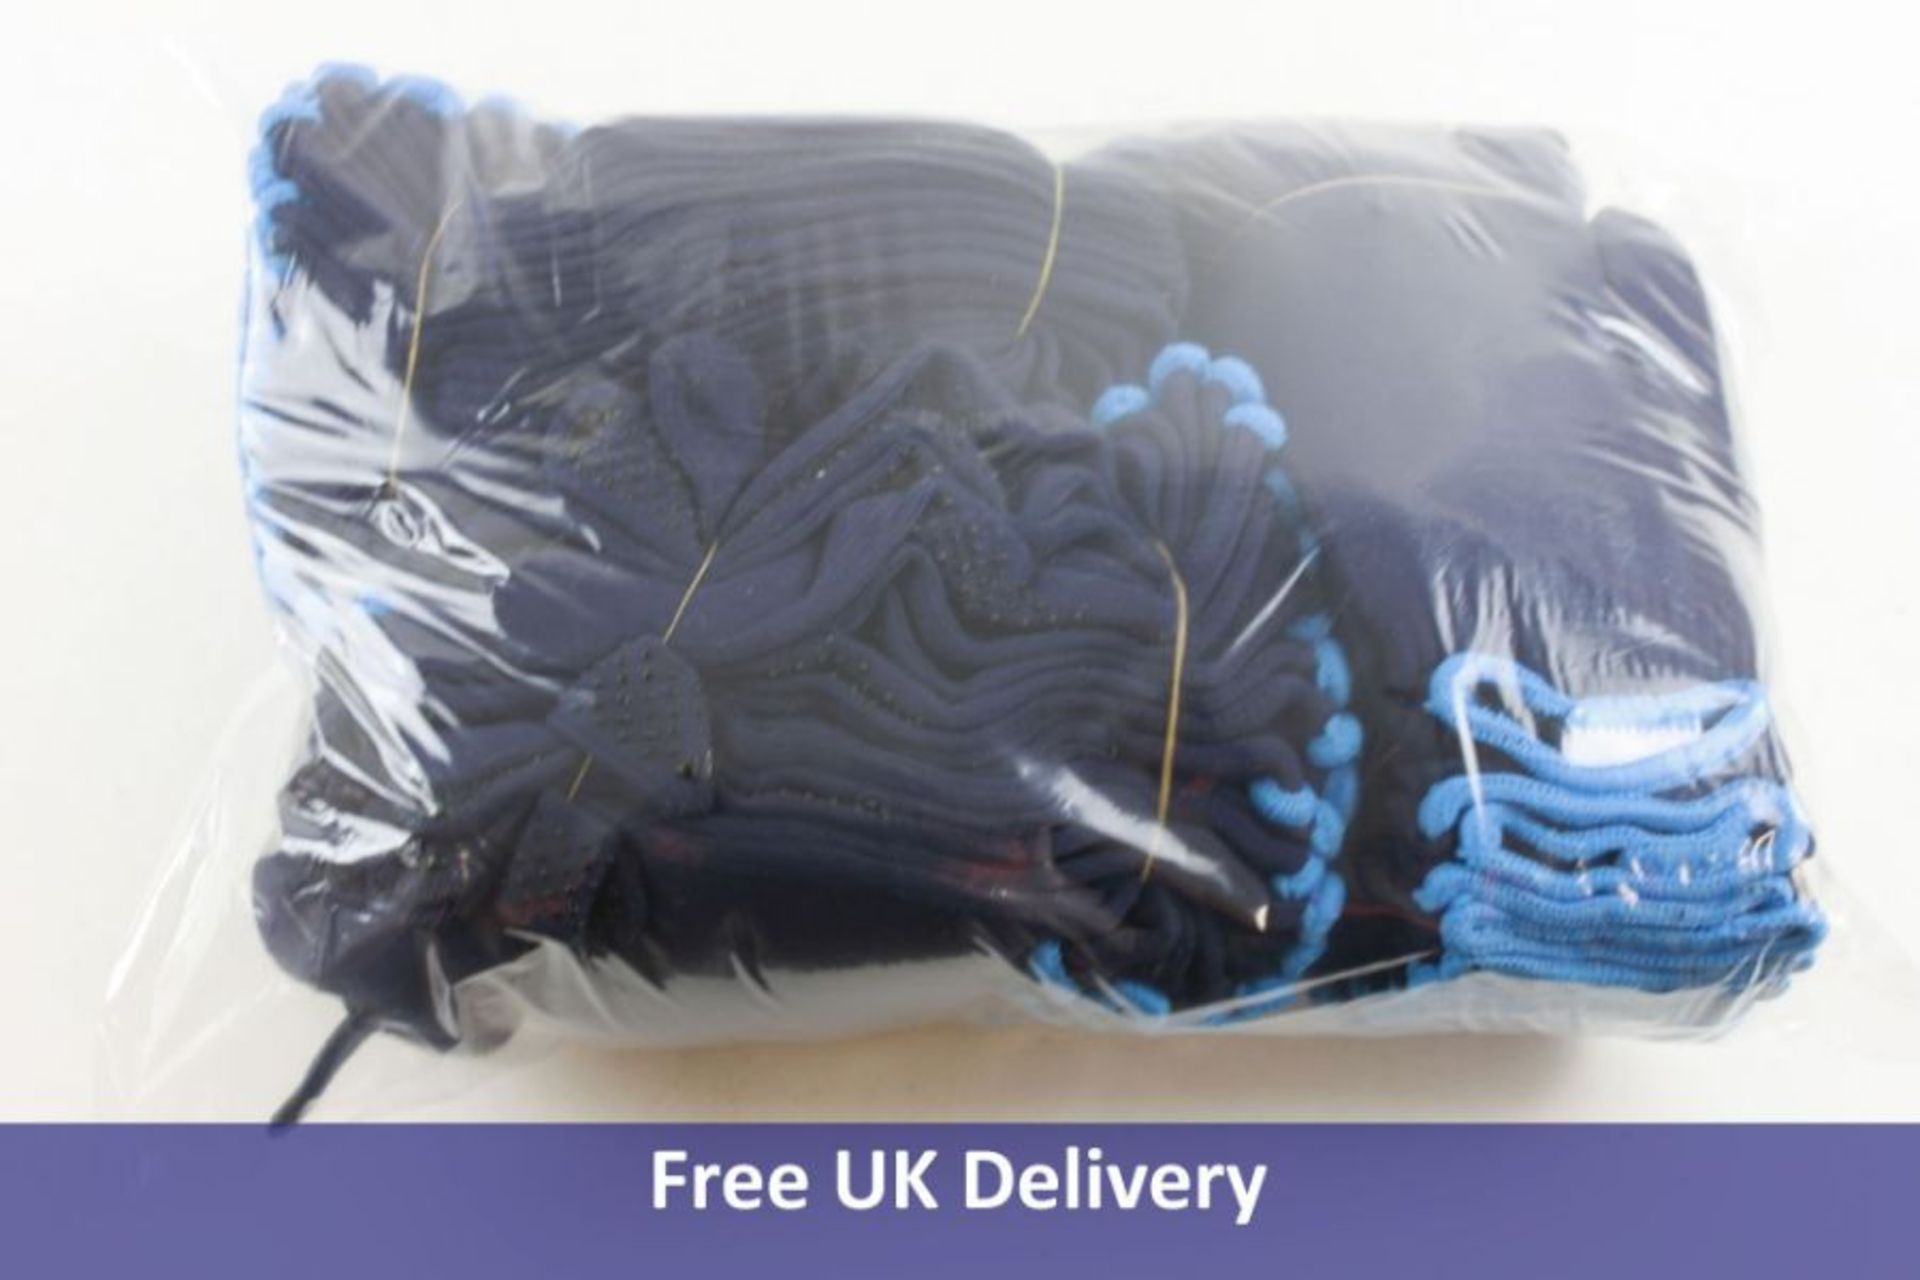 Three Packs Of 10 Anatomic Membrane Gloves, Blue, Size 9